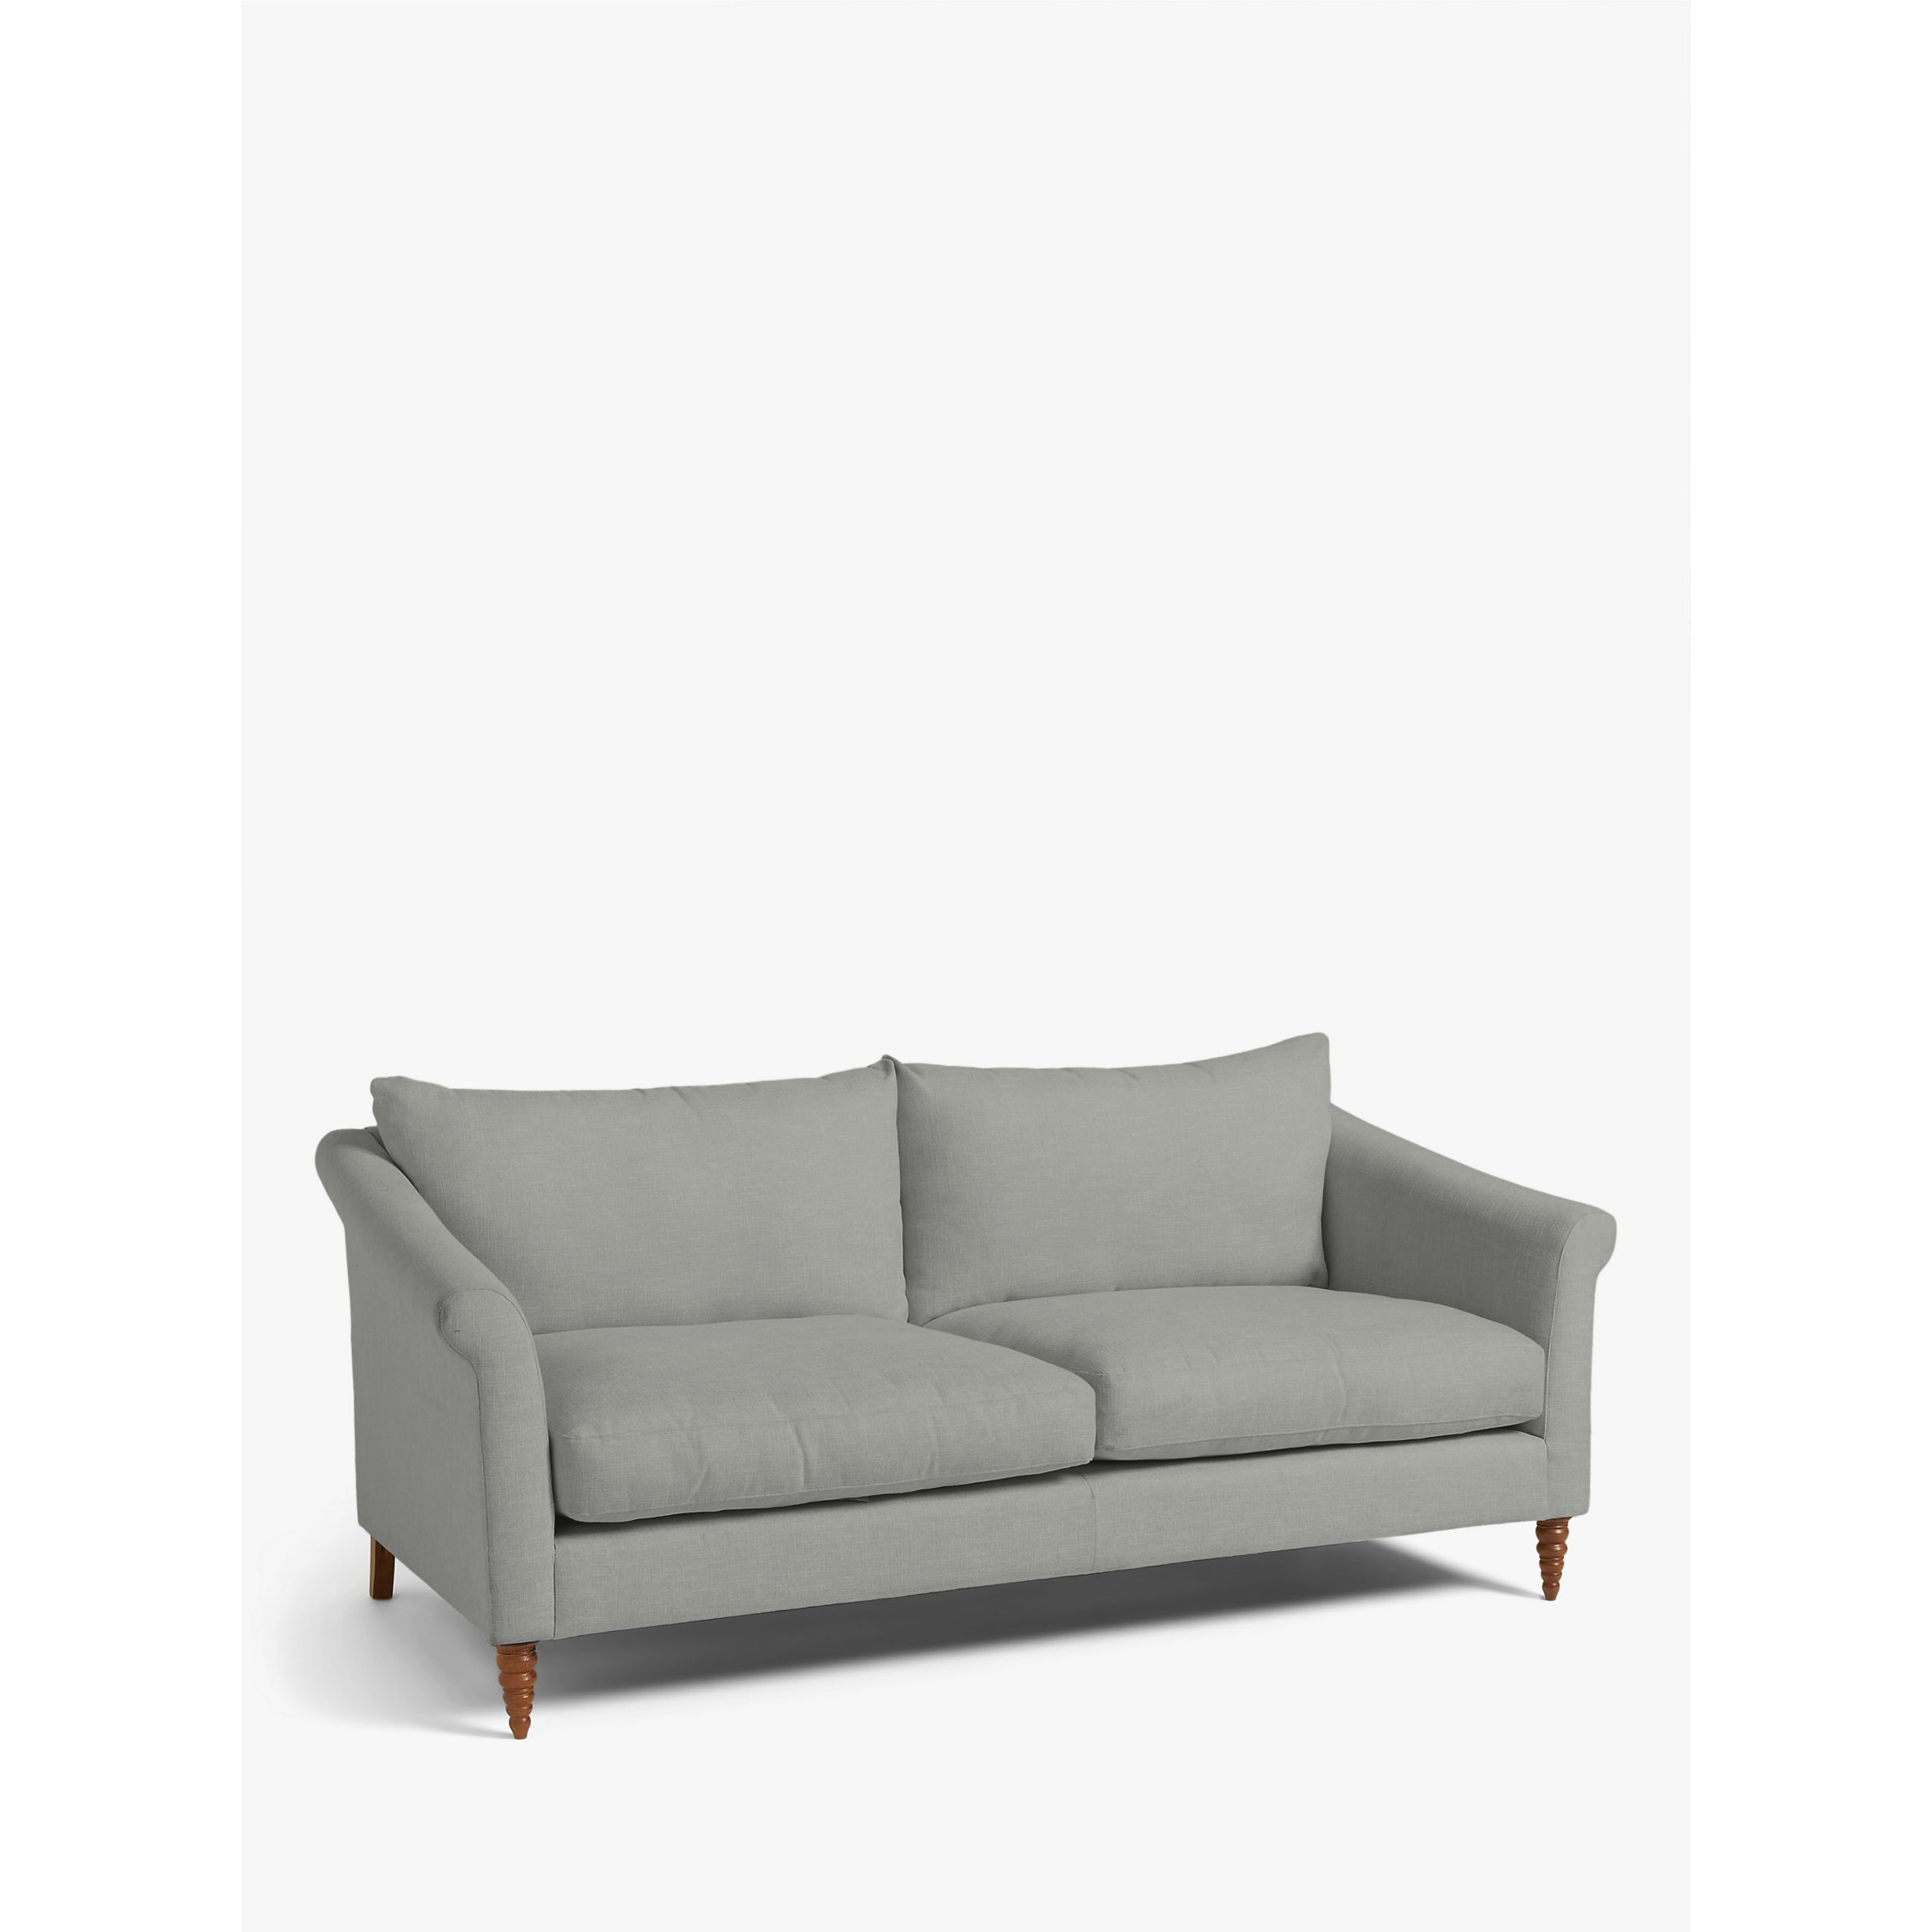 John Lewis Sloane Grand 3 Seater Sofa - image 1